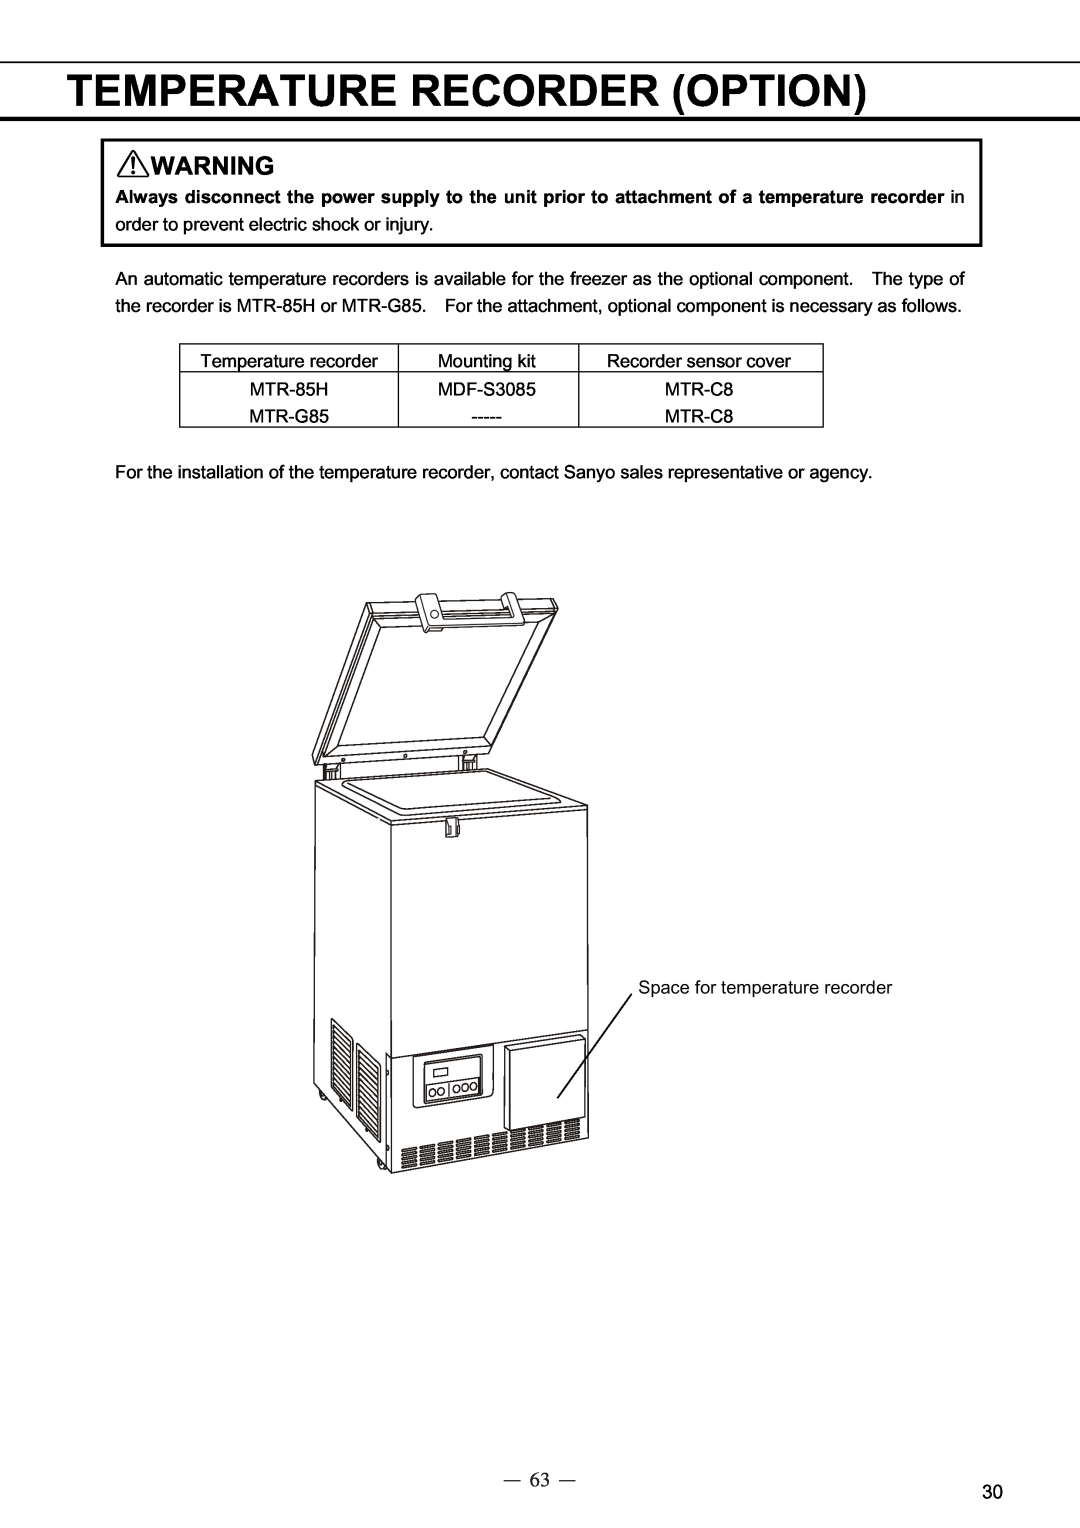 Sanyo MDF-C8V service manual Temperature Recorder Option 